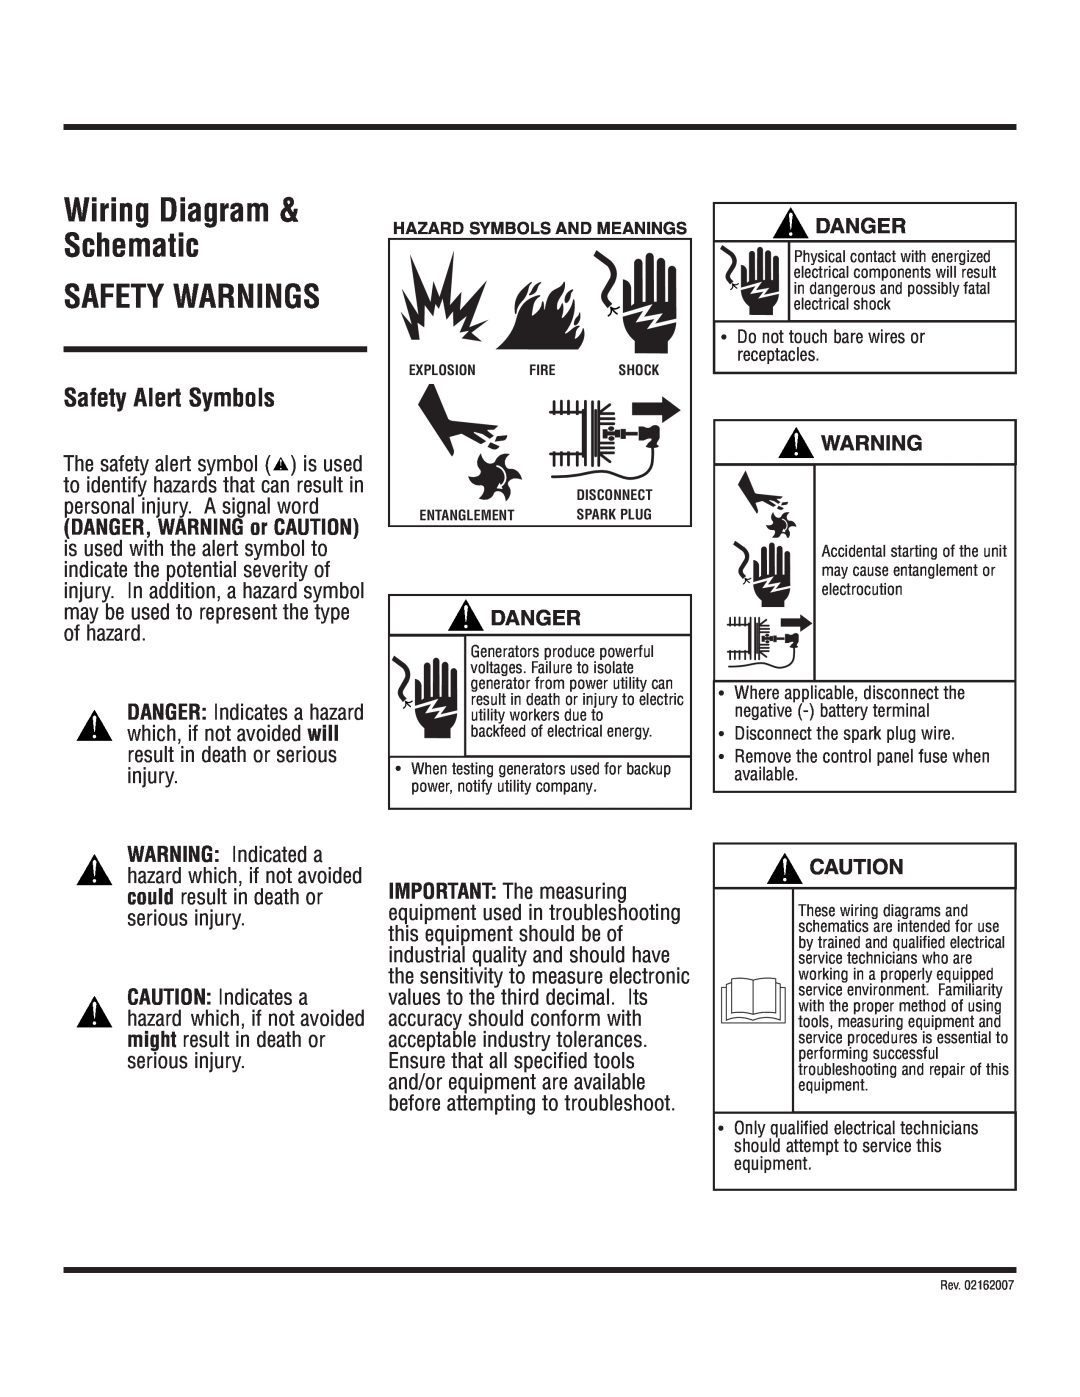 Briggs & Stratton 030426 manual Wiring Diagram & Schematic SAFETY WARNINGS, Safety Alert Symbols, Danger 